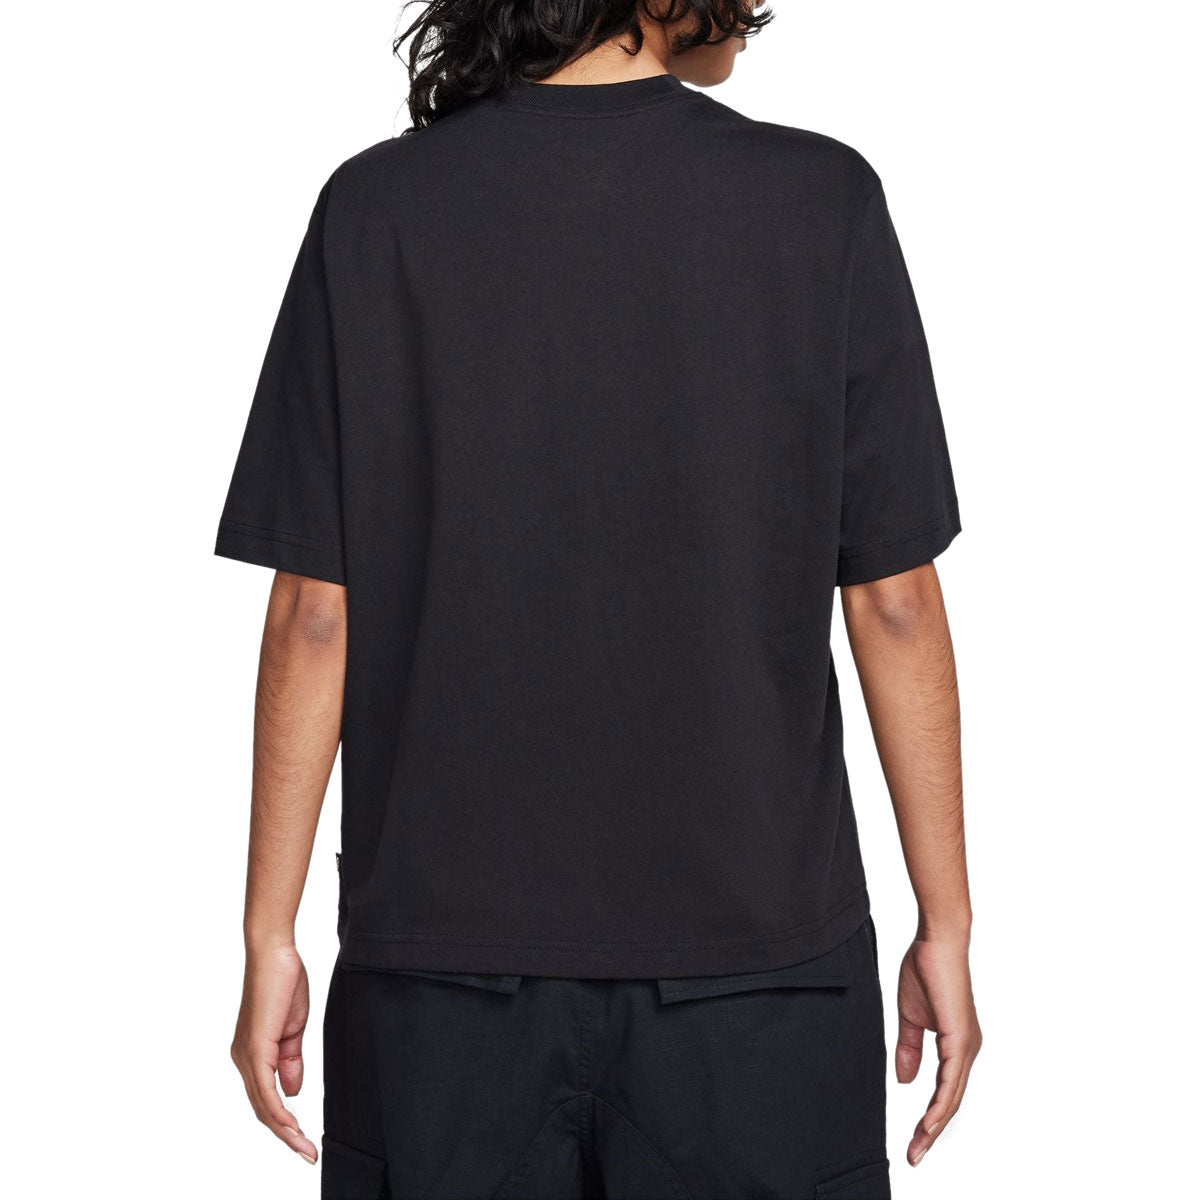 Nike SB Skate Outline T-Shirt - Black image 2